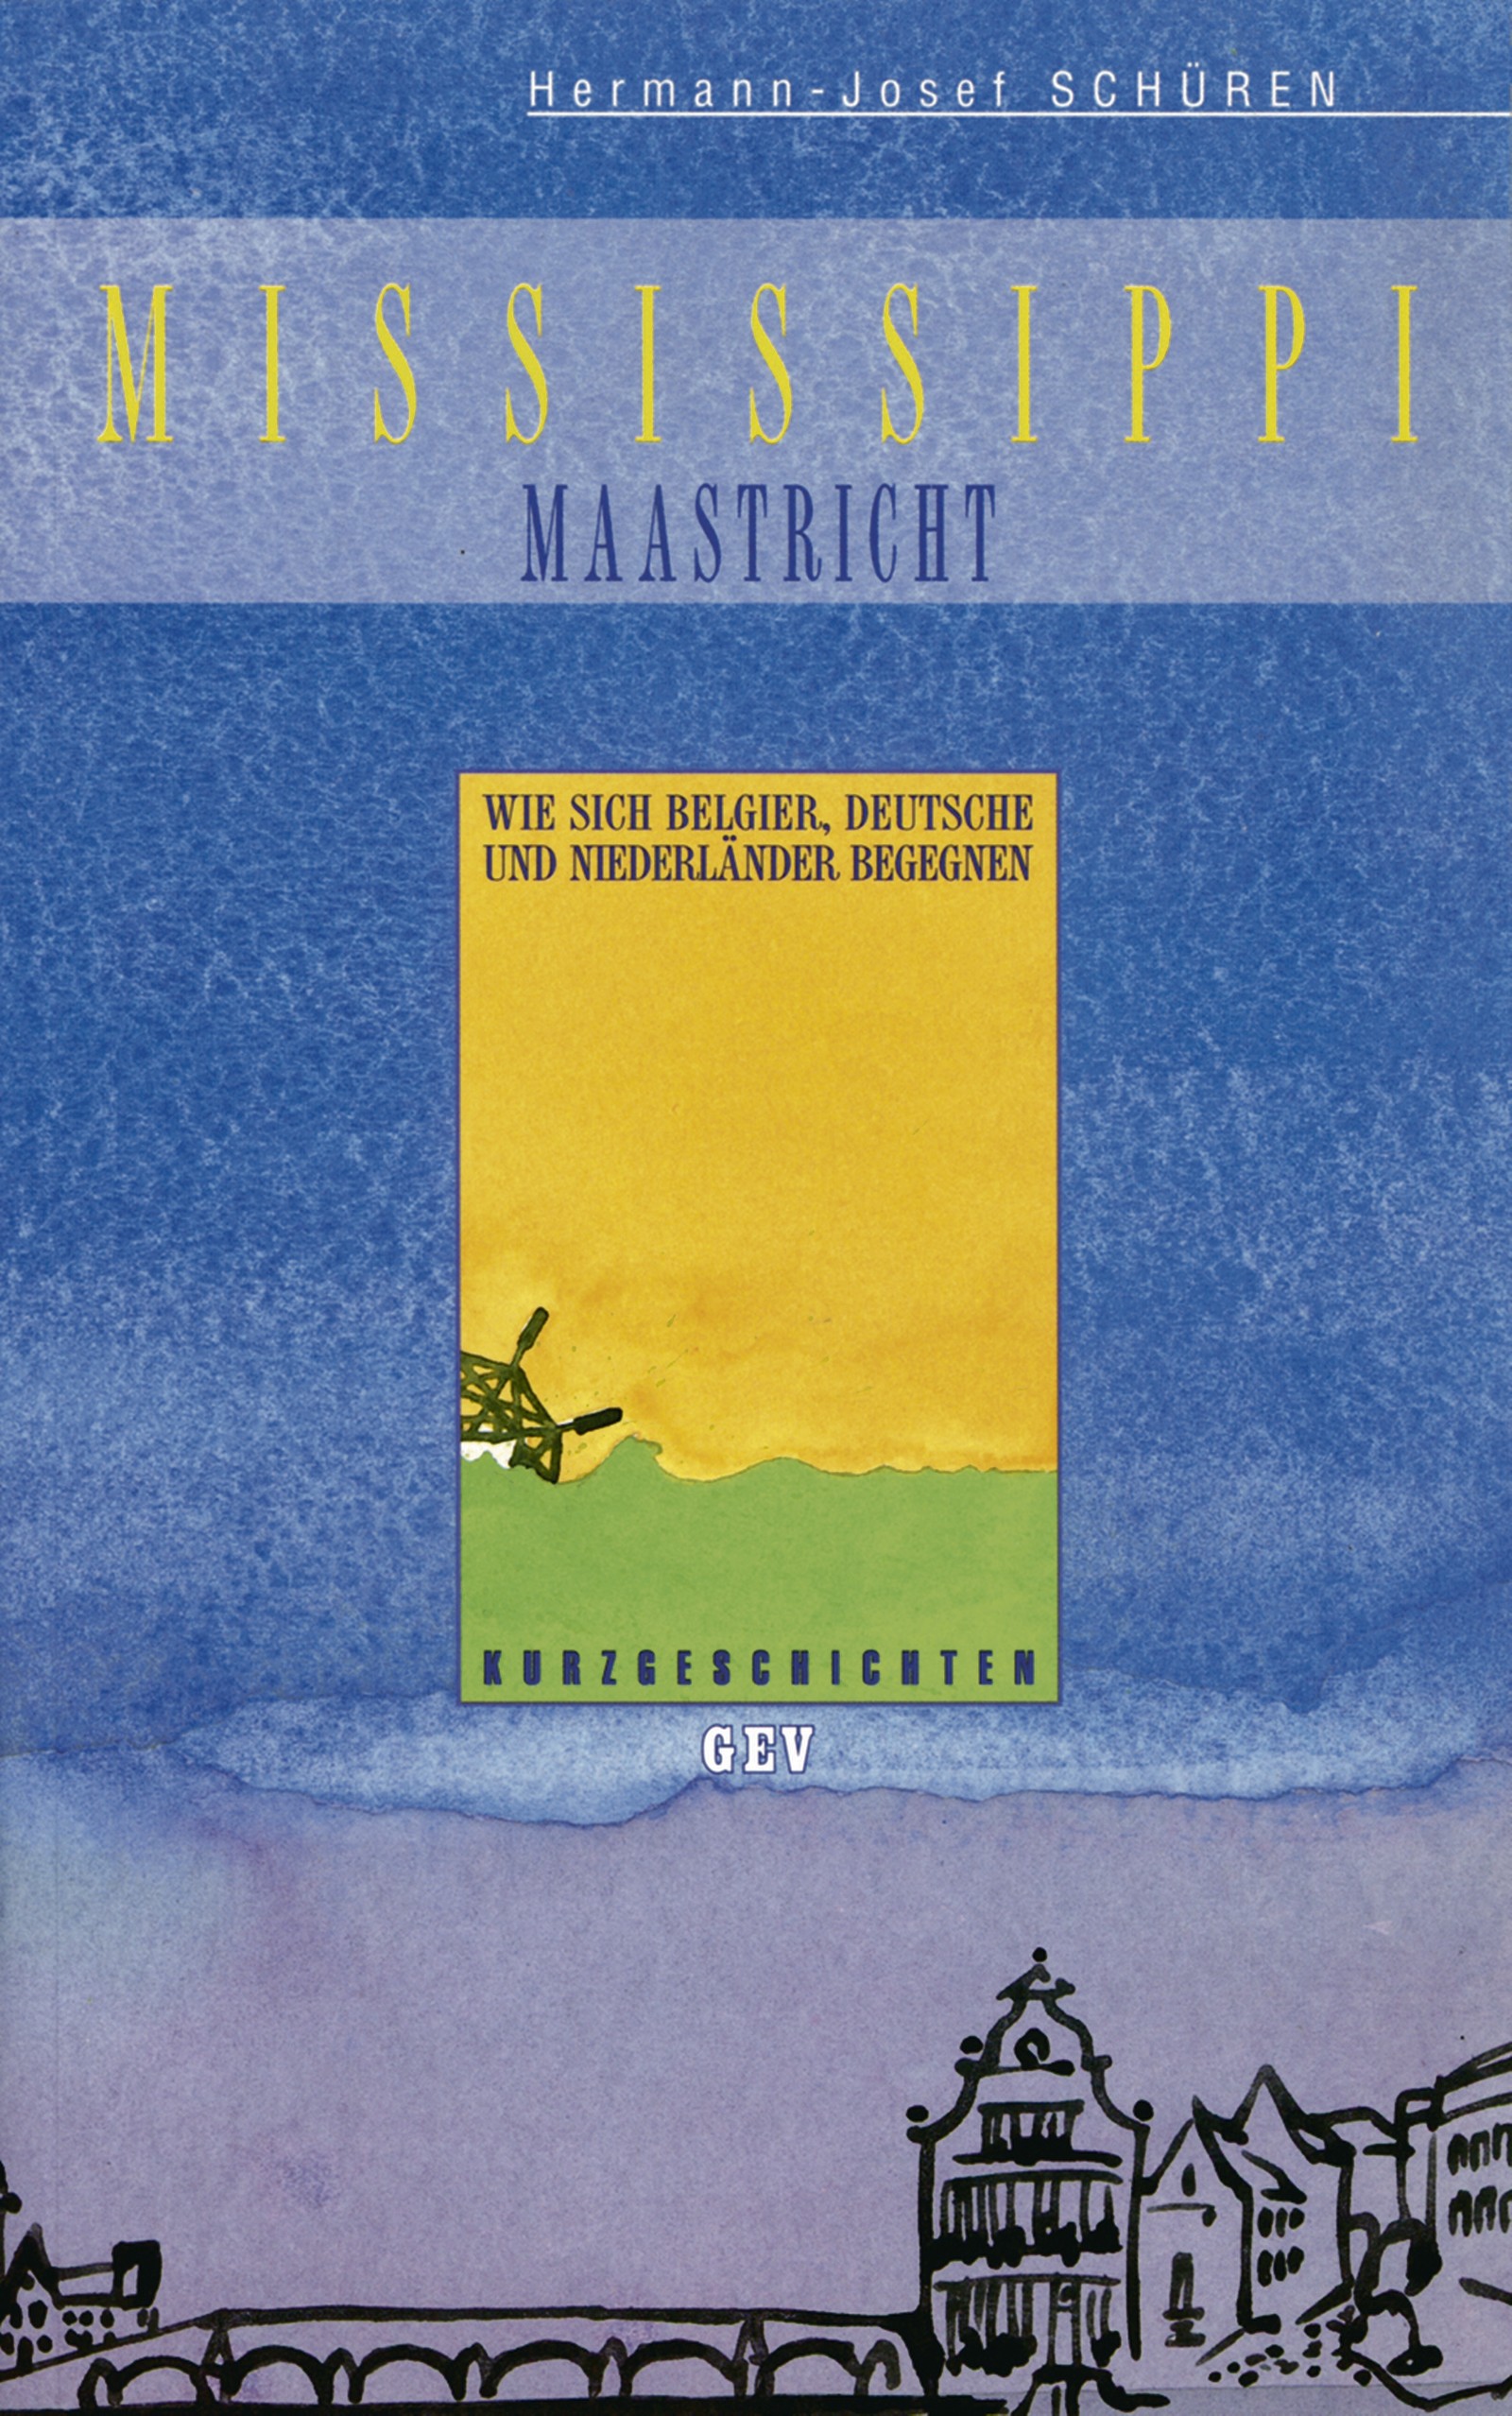 Mississippi Maastricht